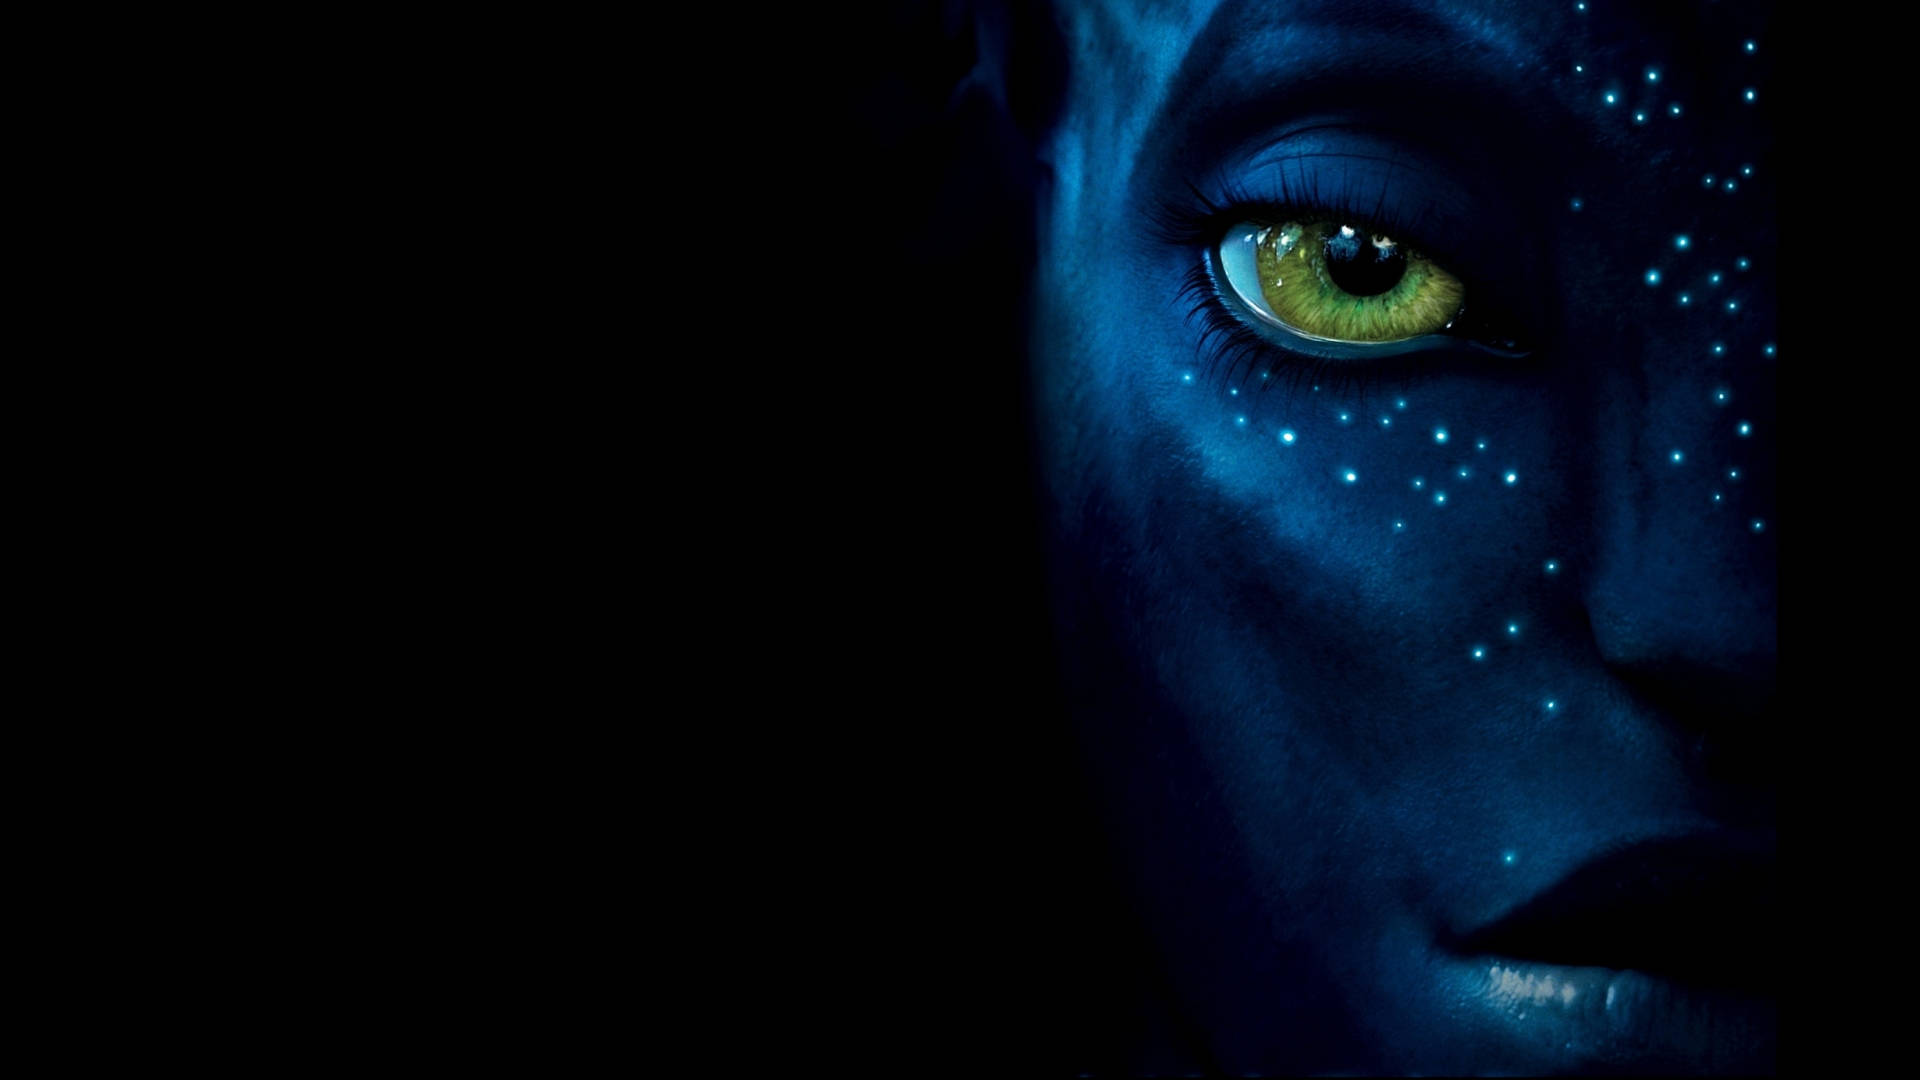 Avatar Na'vi Promotional Poster